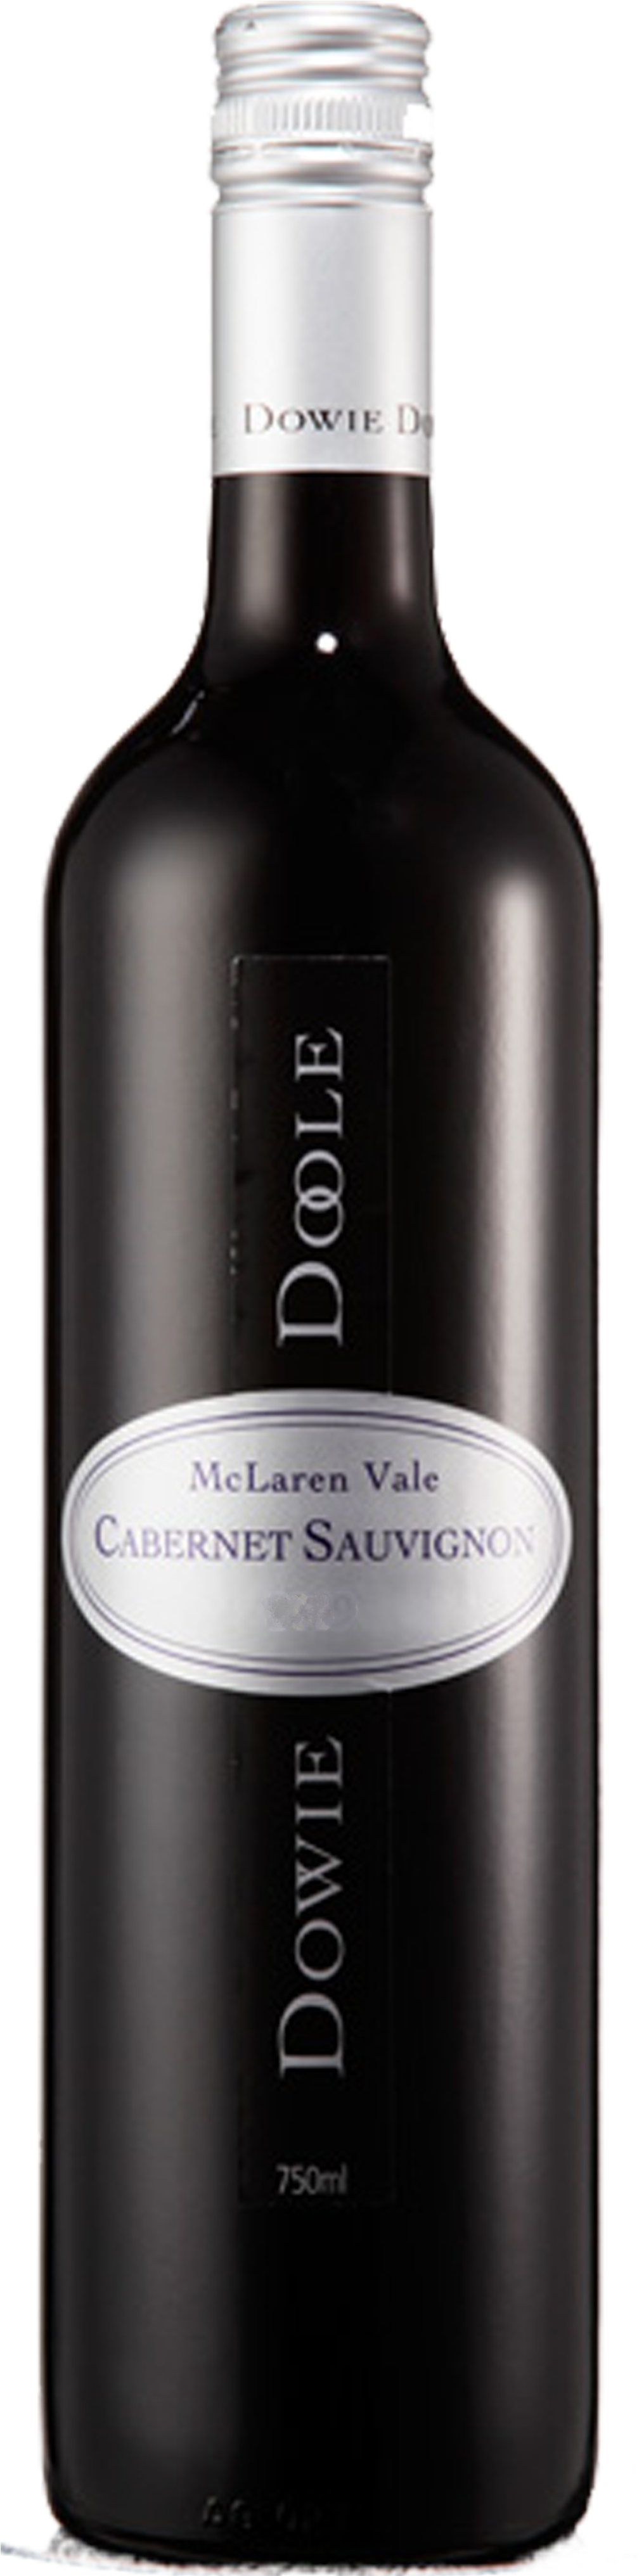 Bottle shot of 2012 Estate Cabernet Sauvignon